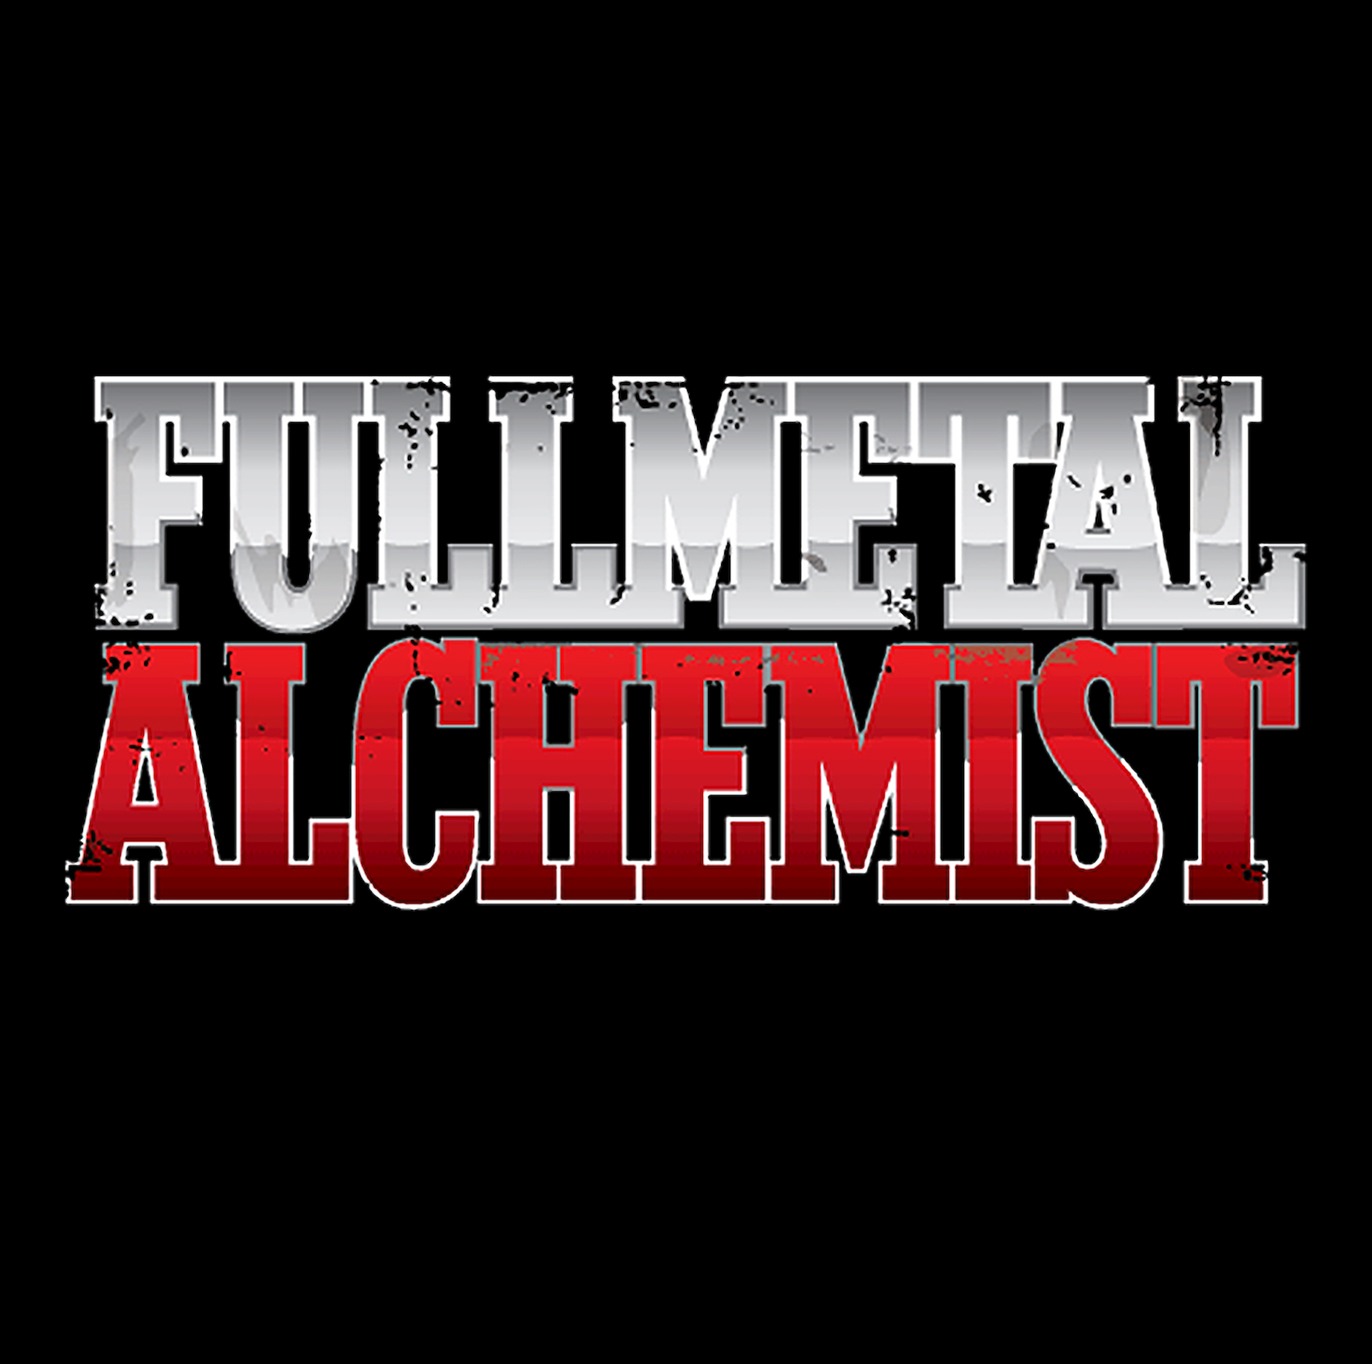 Full Metal Alchemist